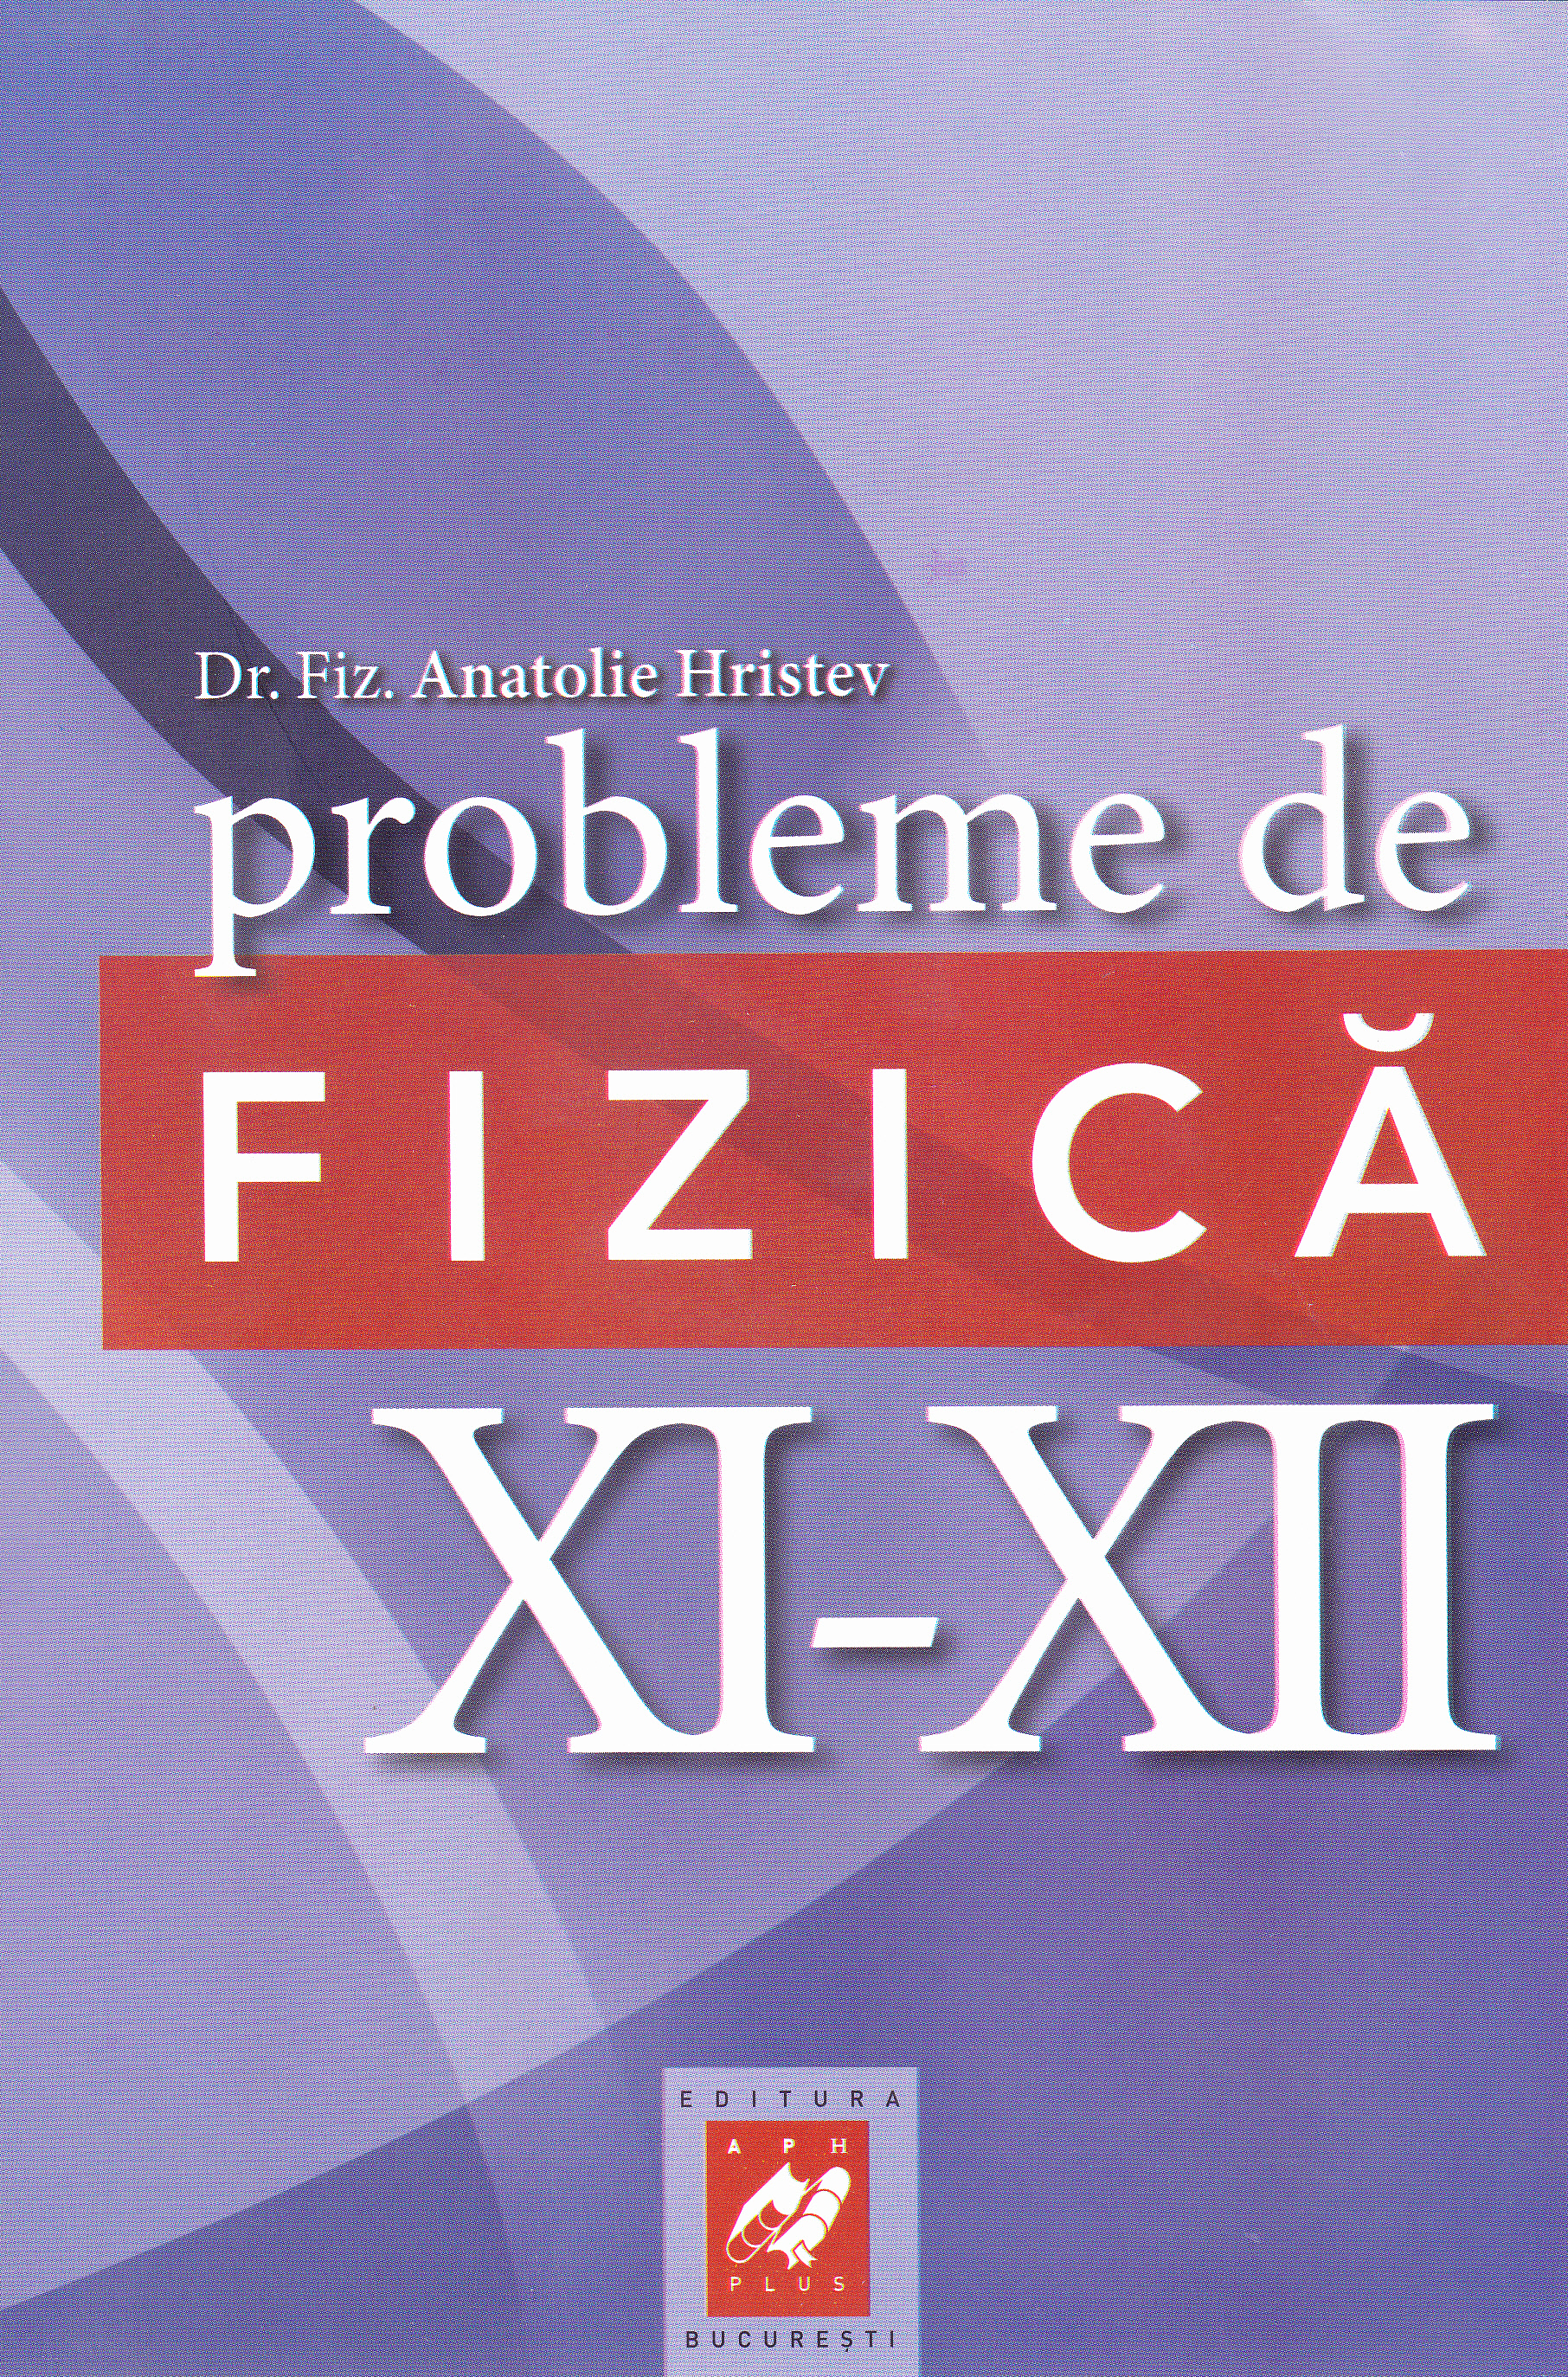 Probleme de Fizica cls. 11-12 ed.2012 - Anatolie Hristev